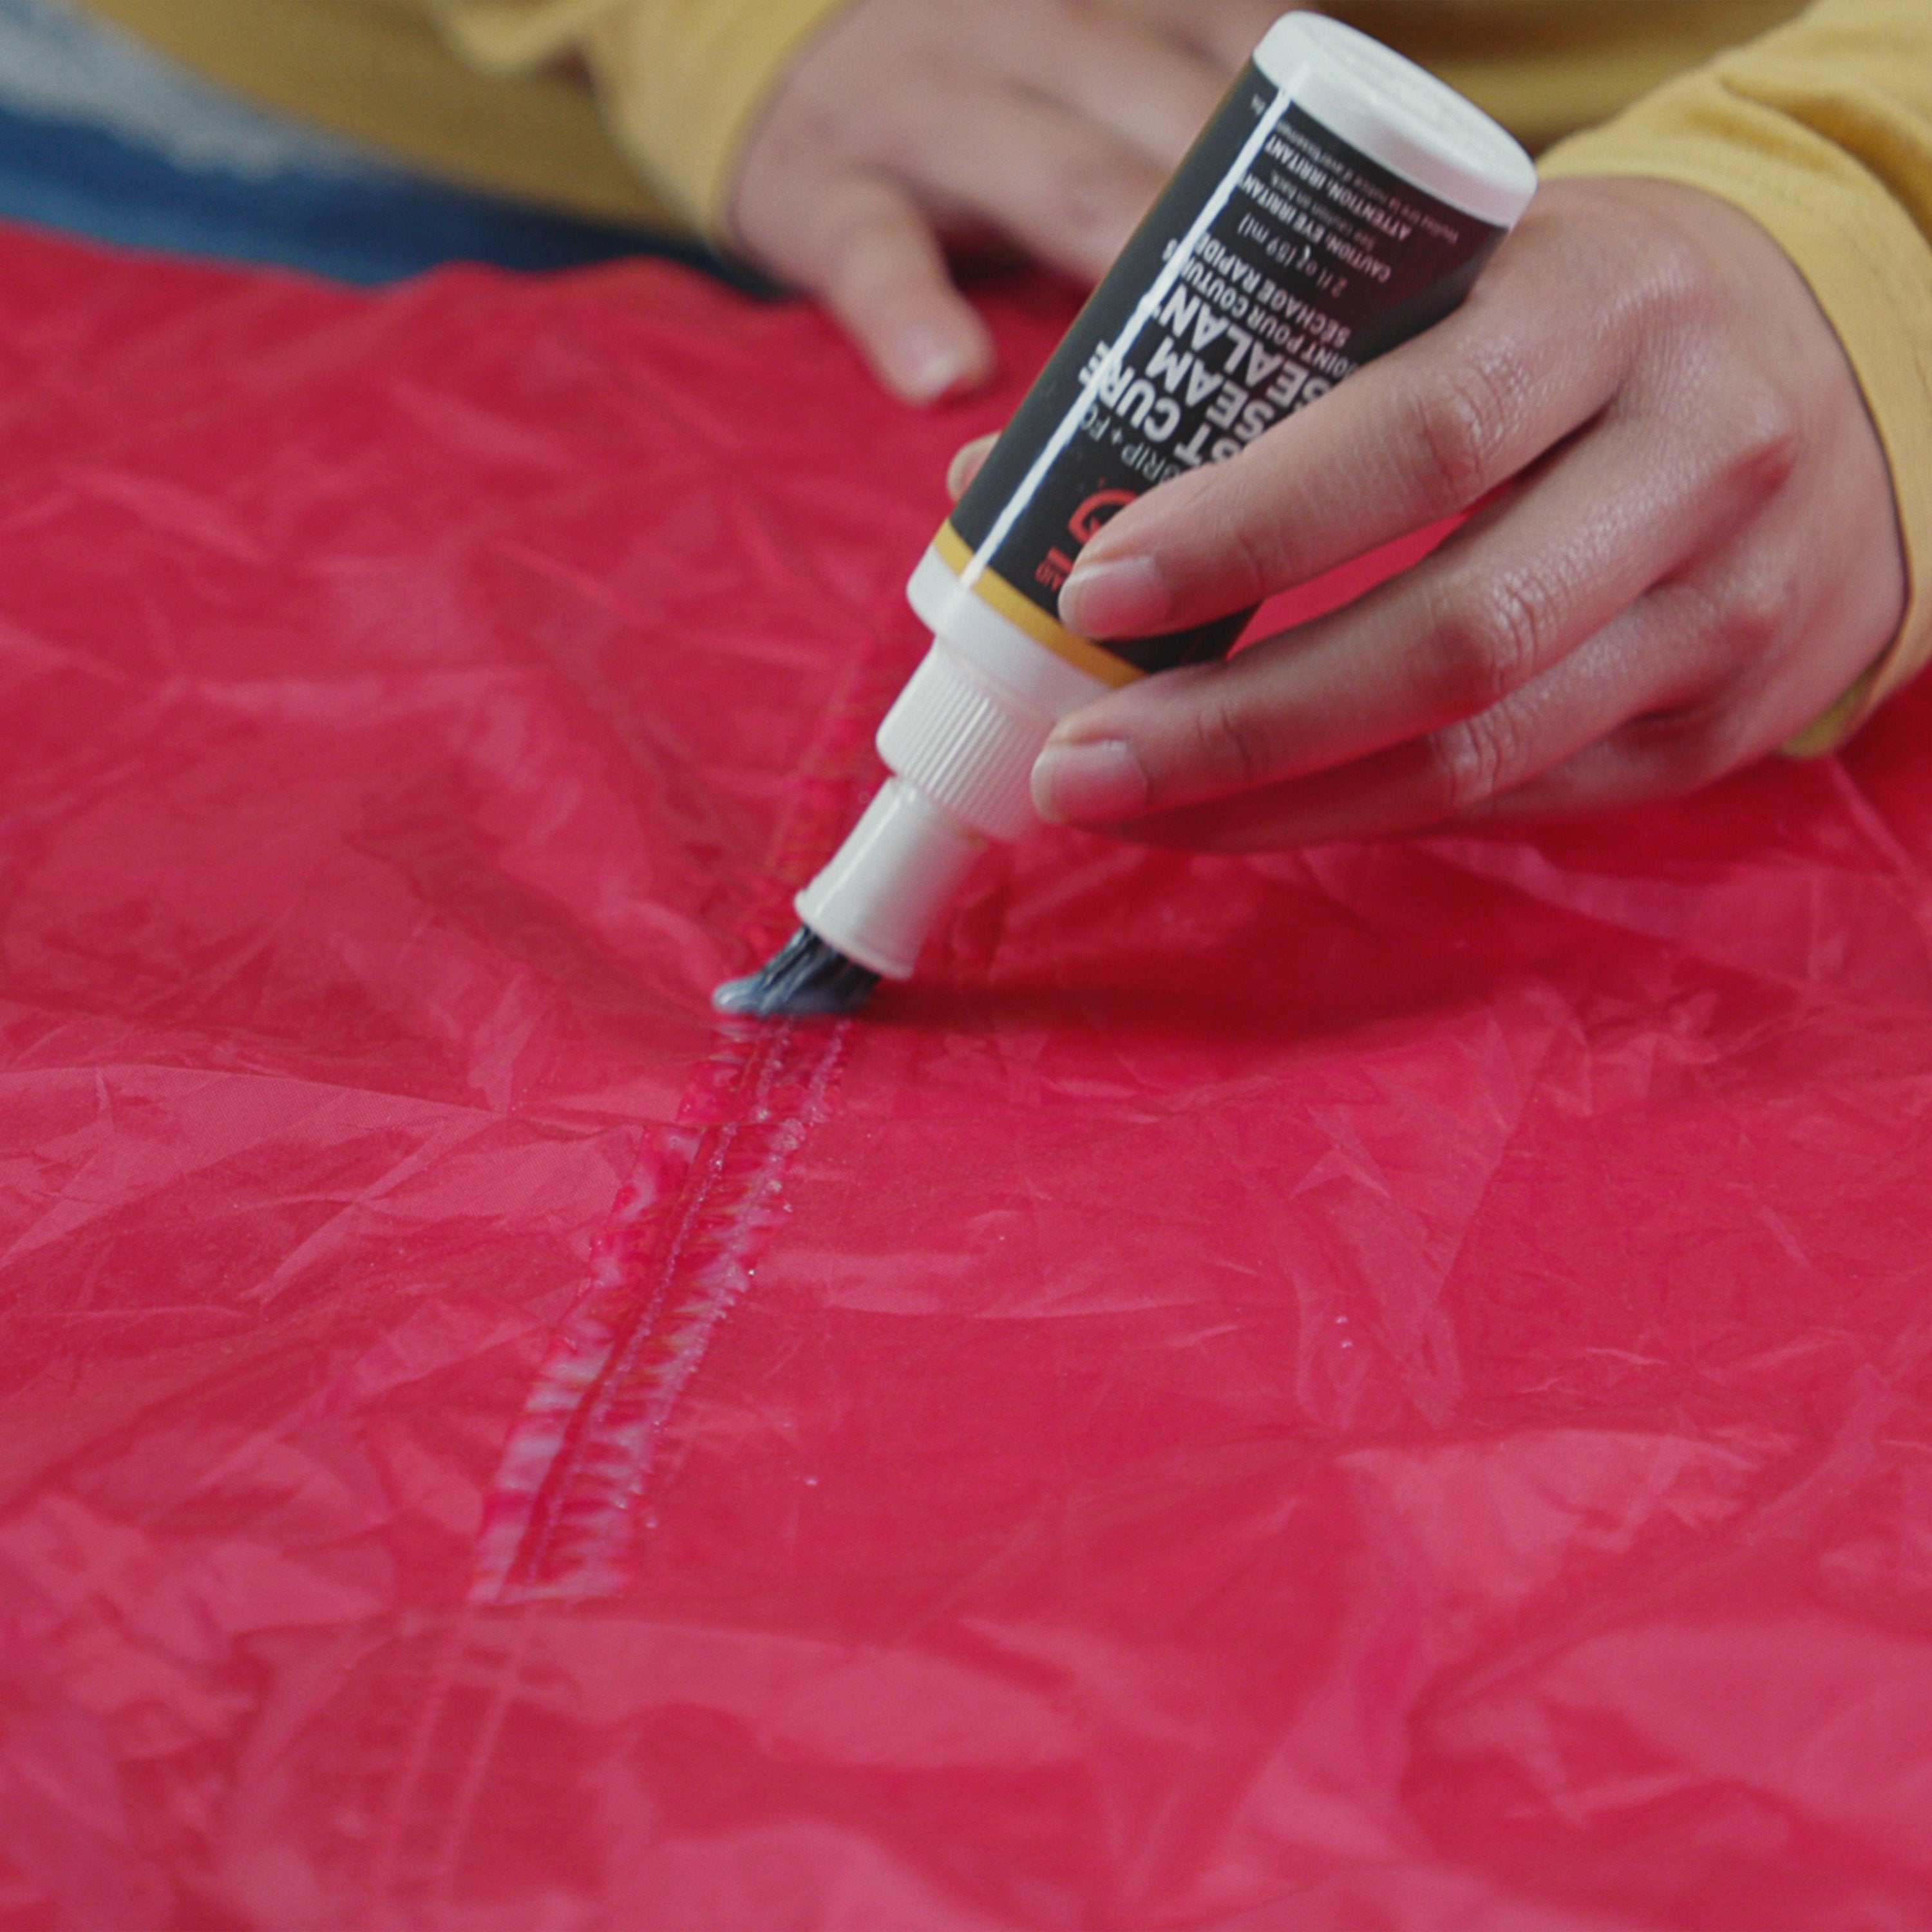 Gear Aid Seam Grip Sealer and Adhesive - Repairs Nylon, Canvas, Seams, and  Holes